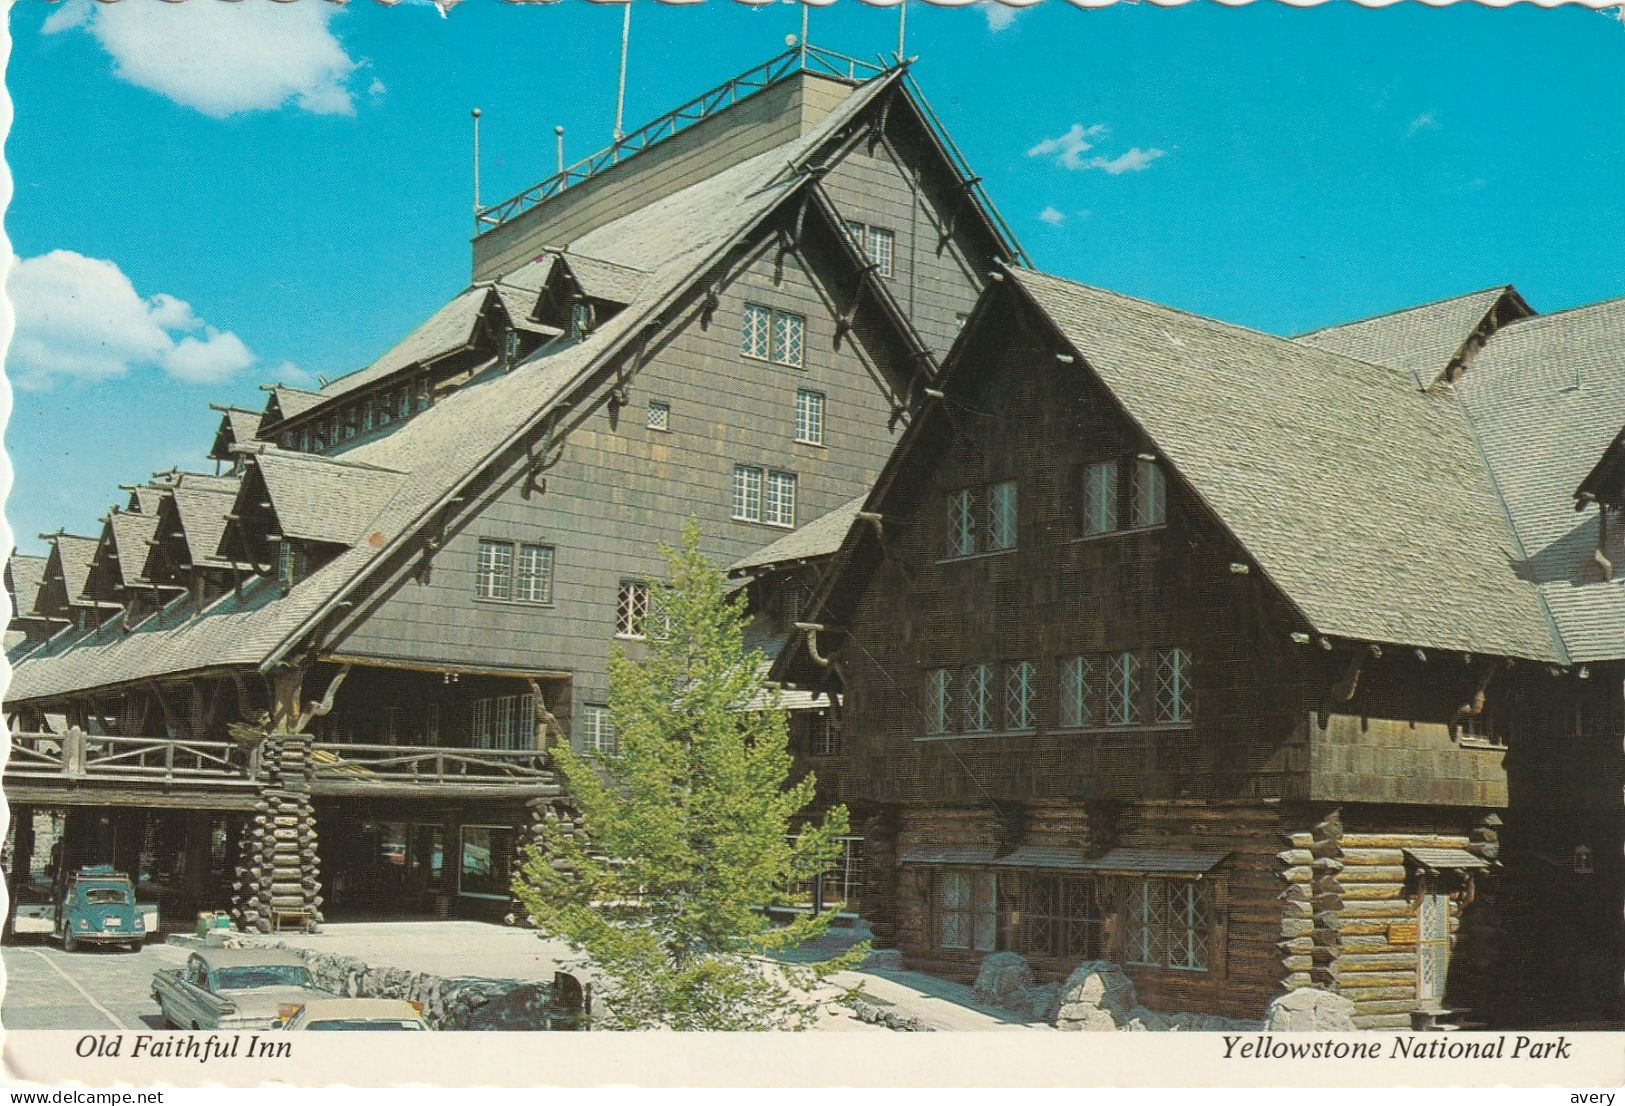 Old Faithful Inn, Yellowstone National Park, Wyoming - Yellowstone